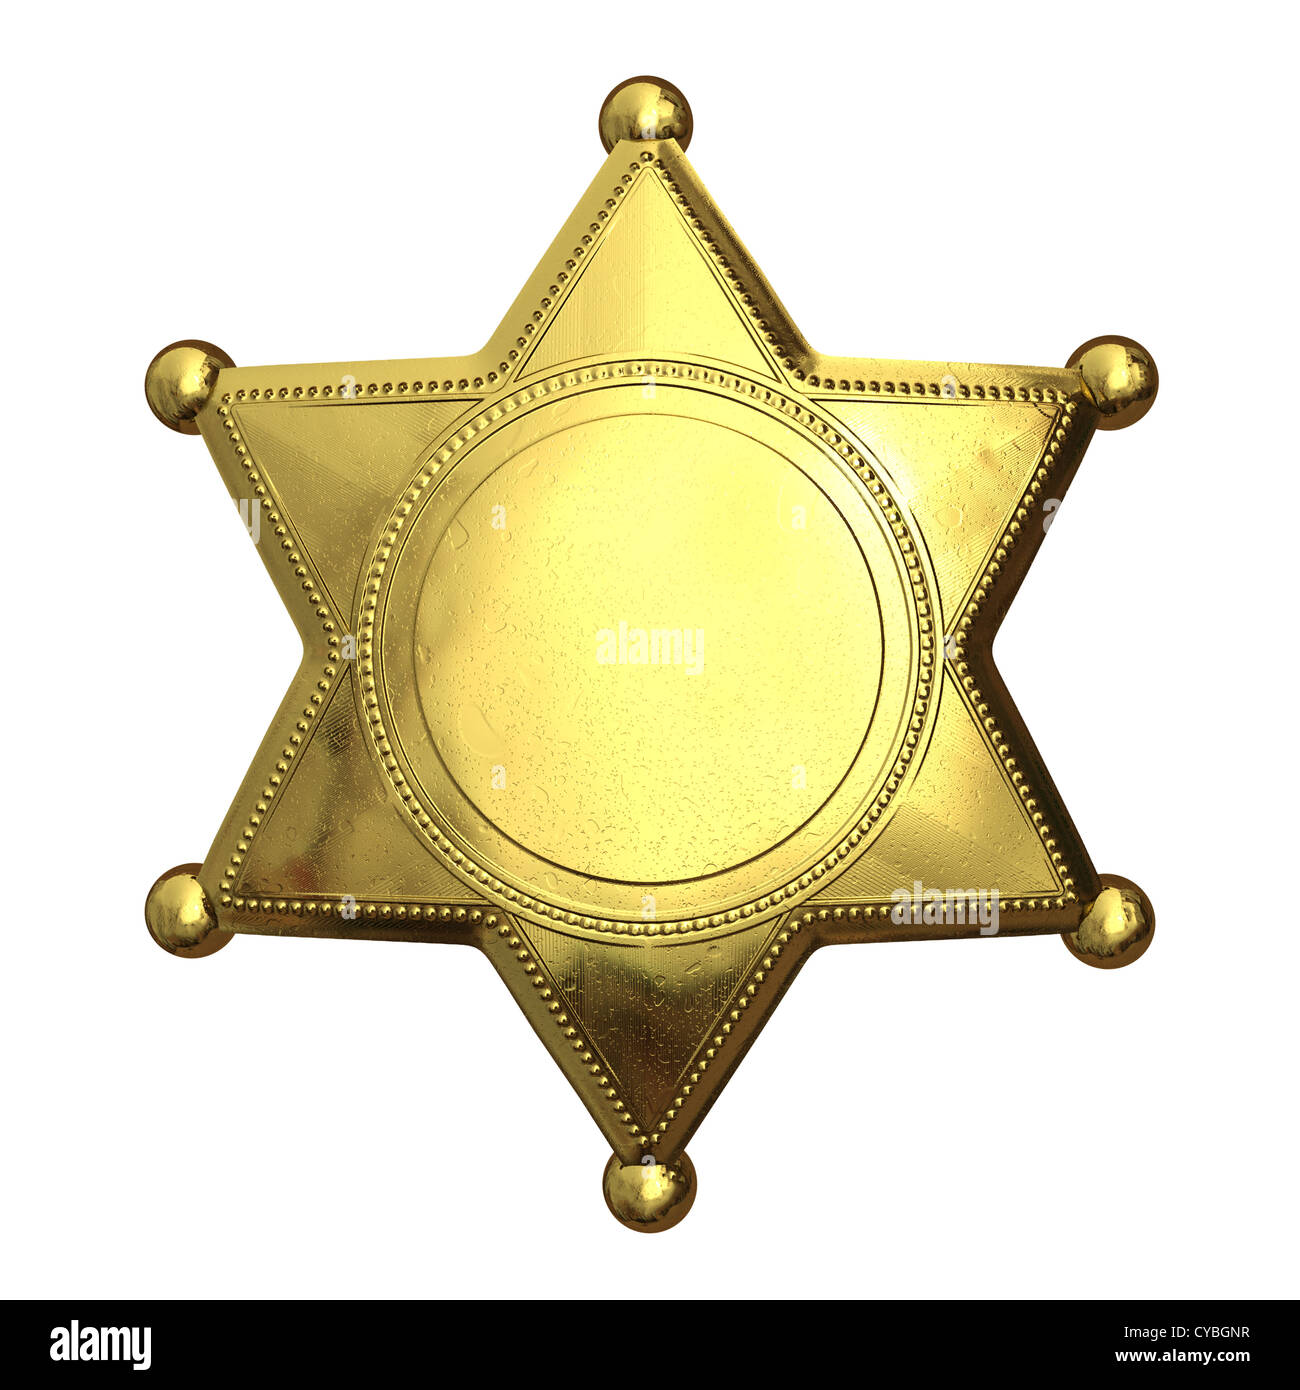 Golden sheriff's badge - isolated on white Stock Photo